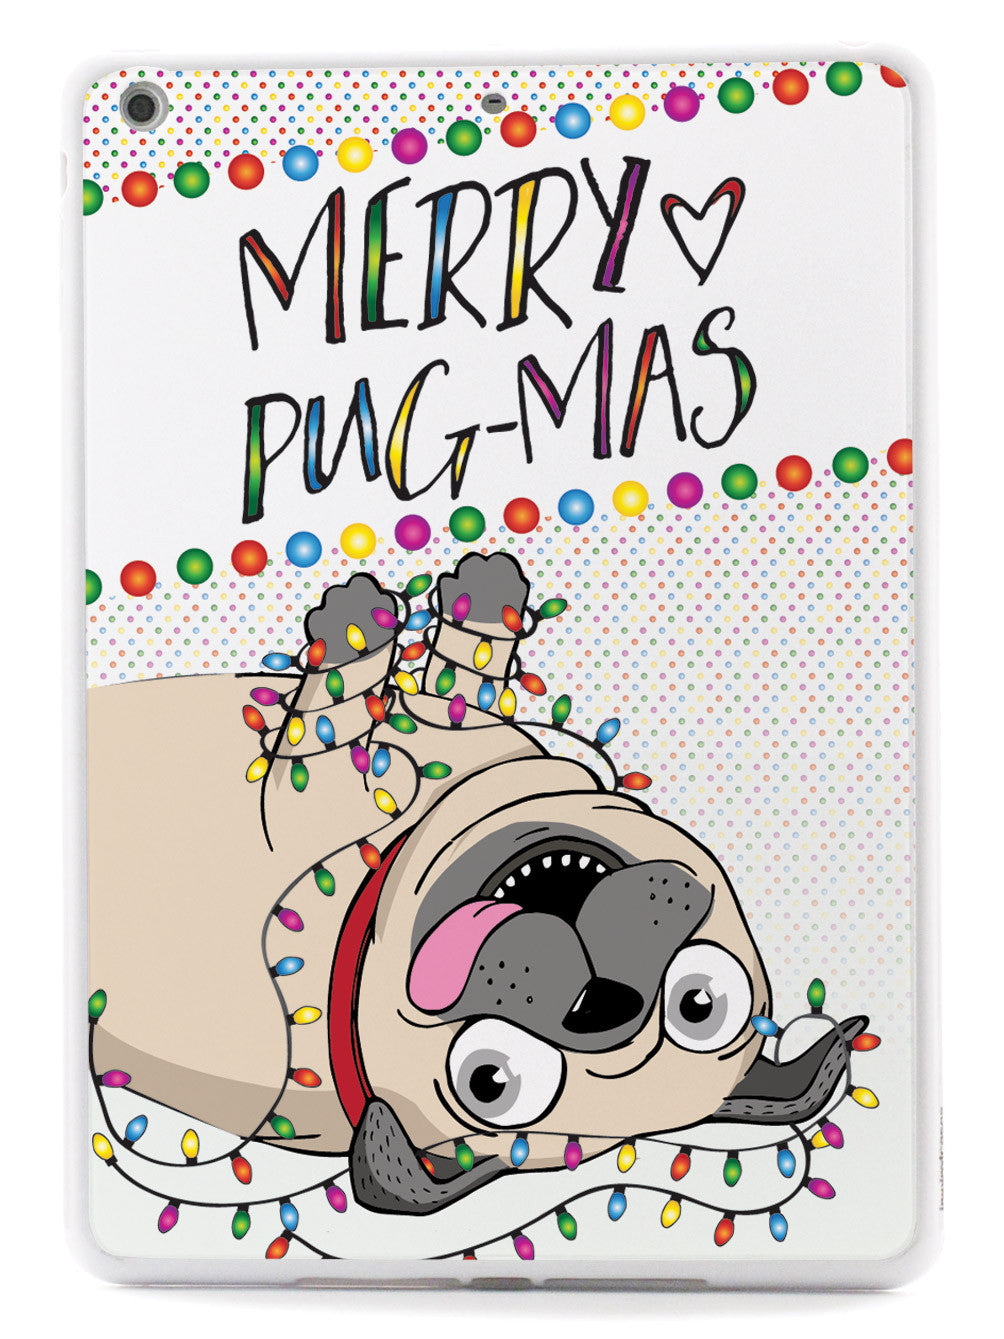 Merry Pugmas - Christmas Case